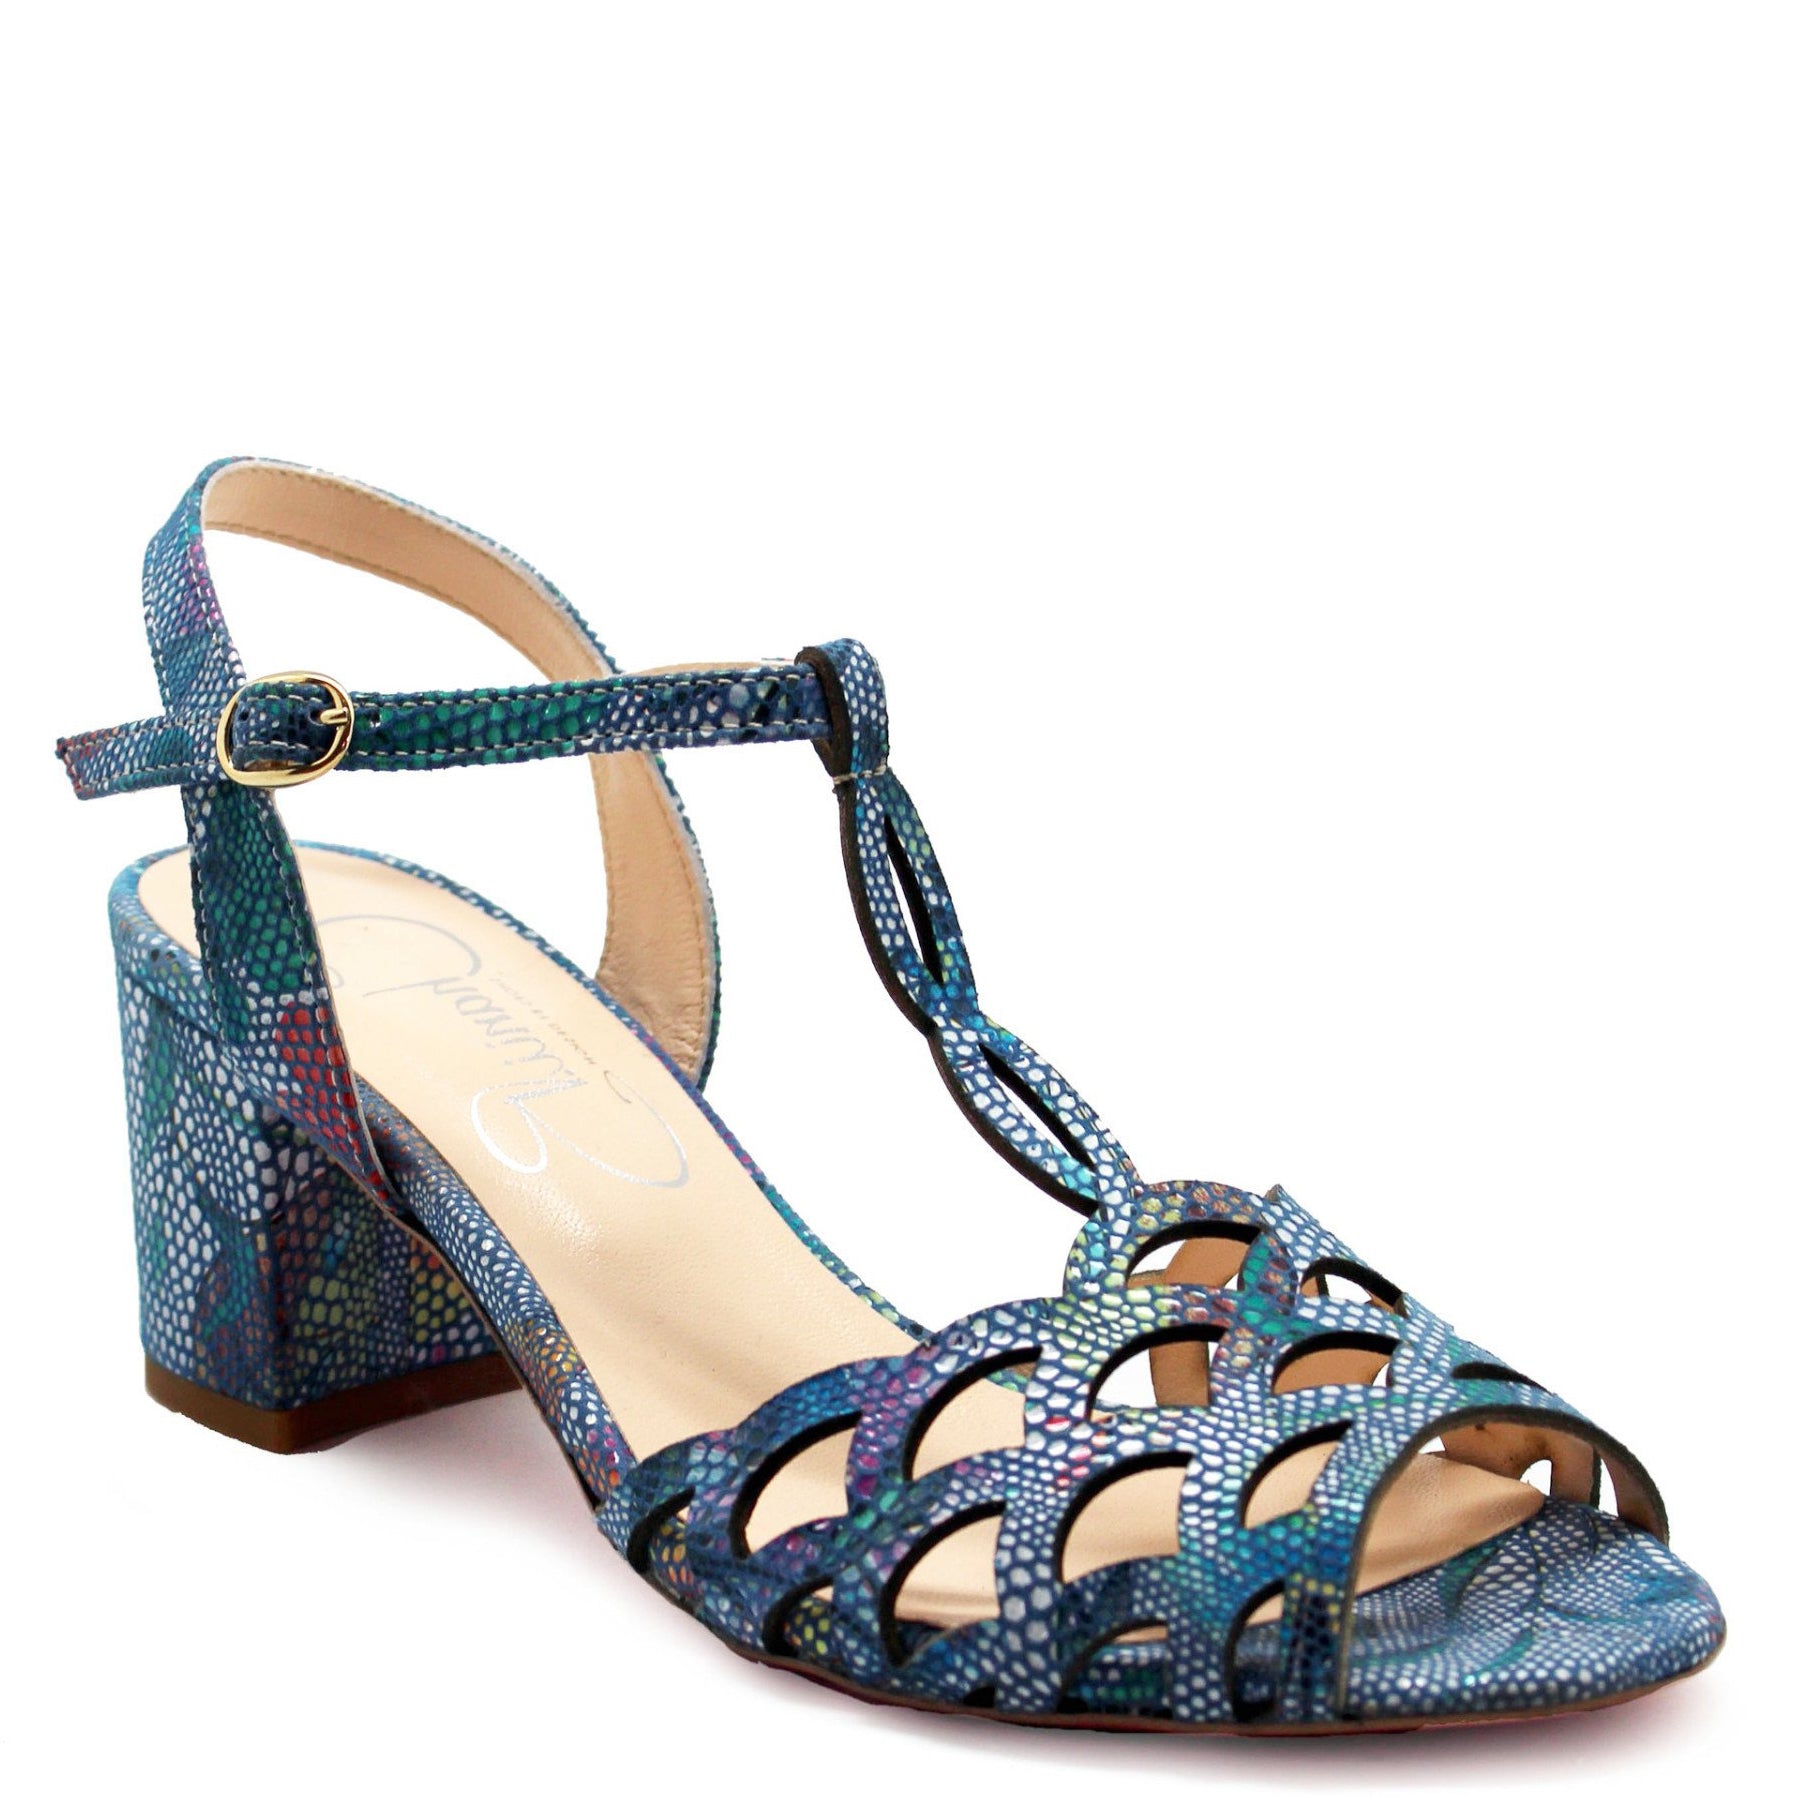 Chanii B "Coquille" Blue/Floral Sandal